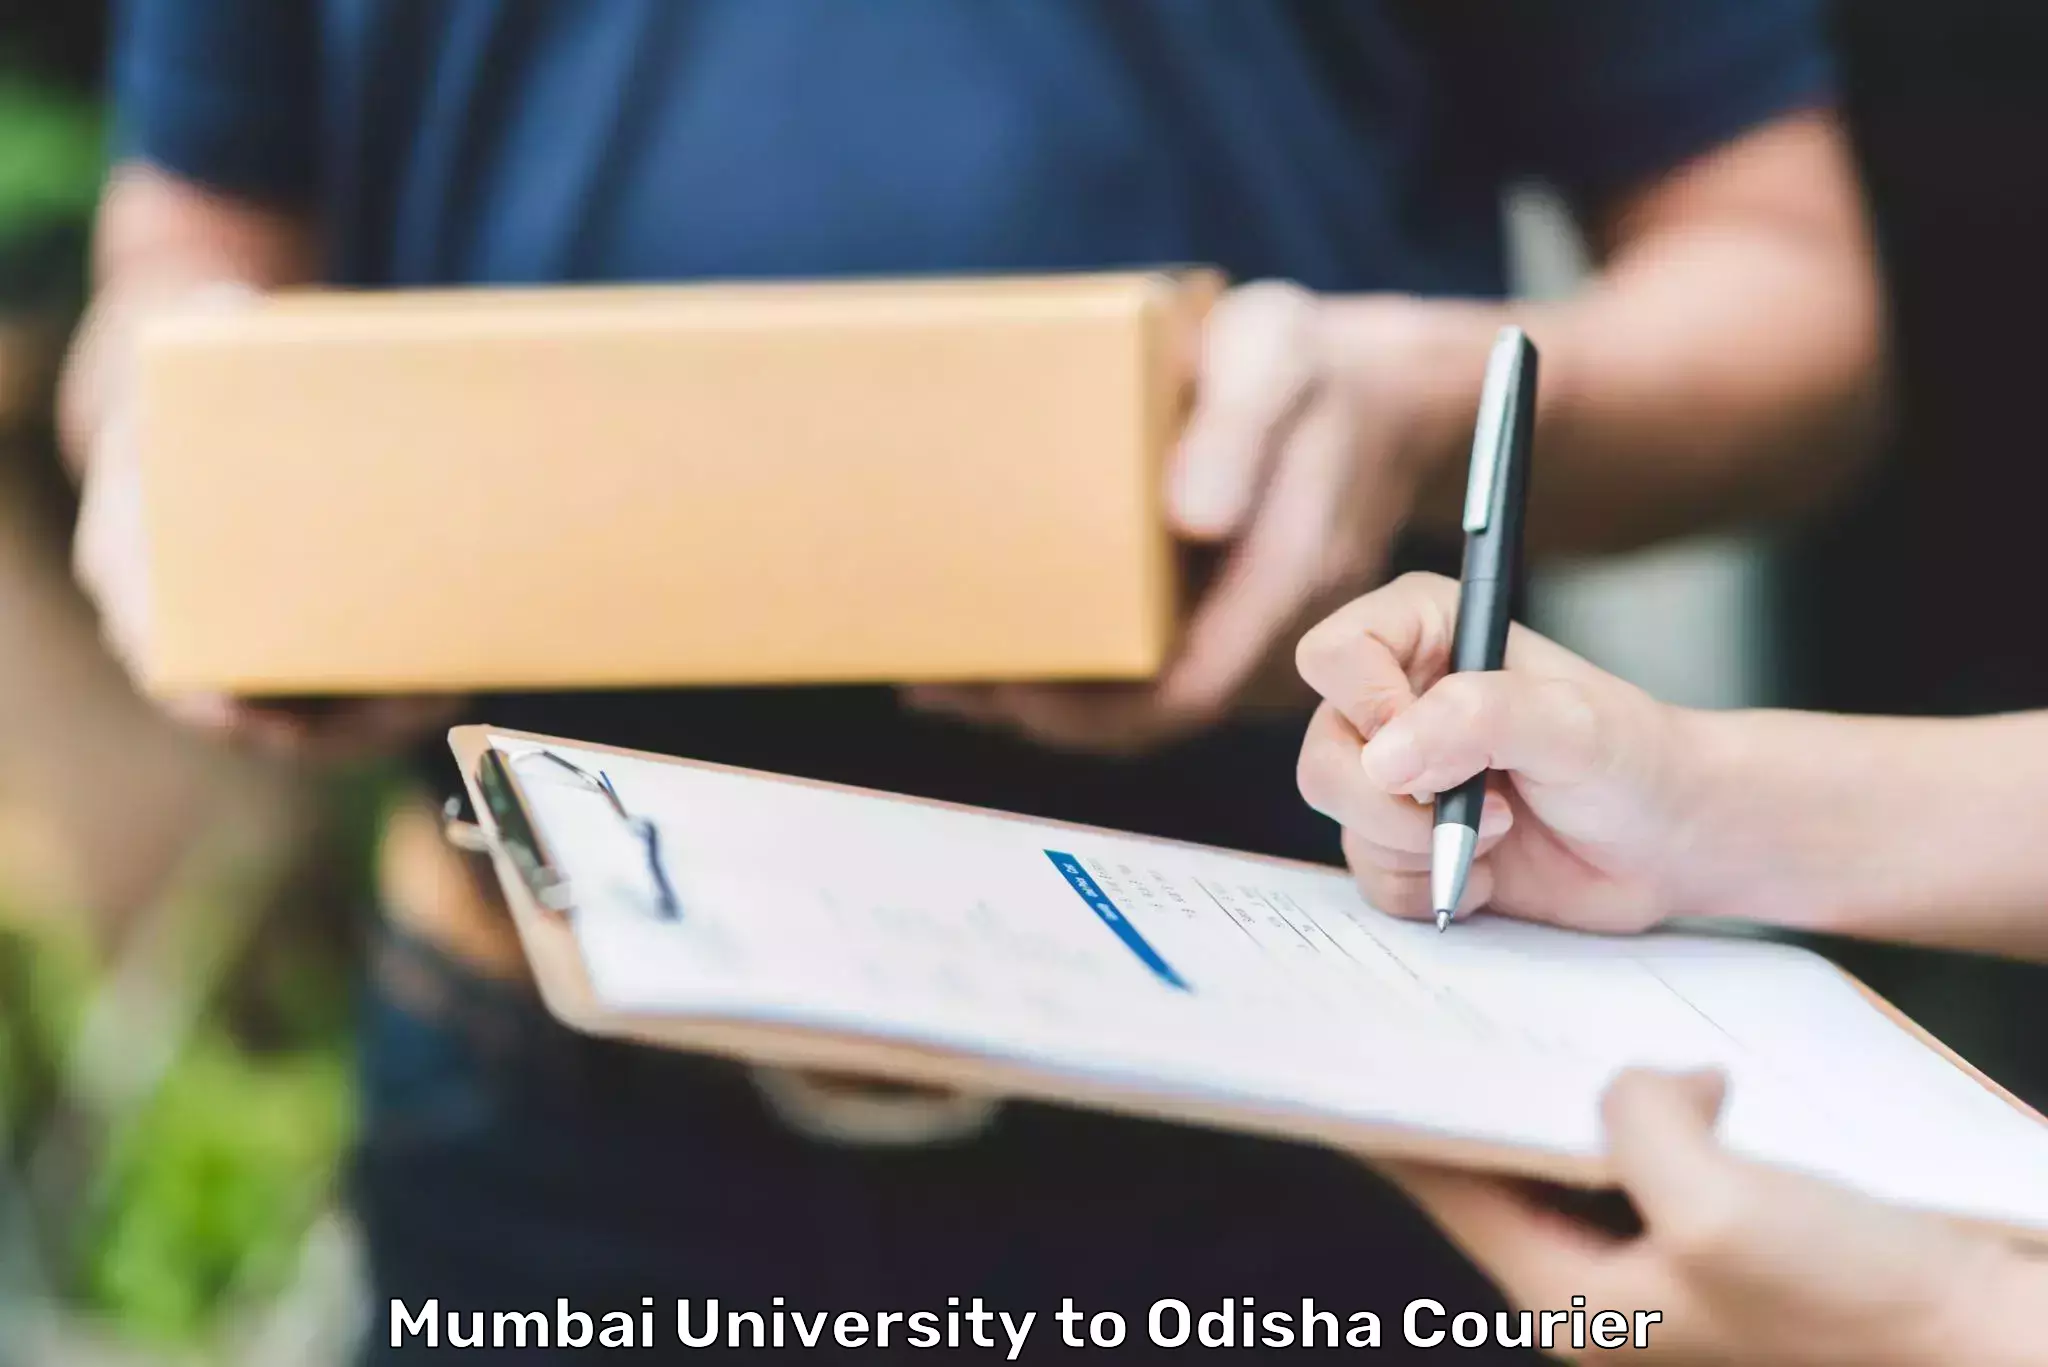 24/7 courier service Mumbai University to Odisha